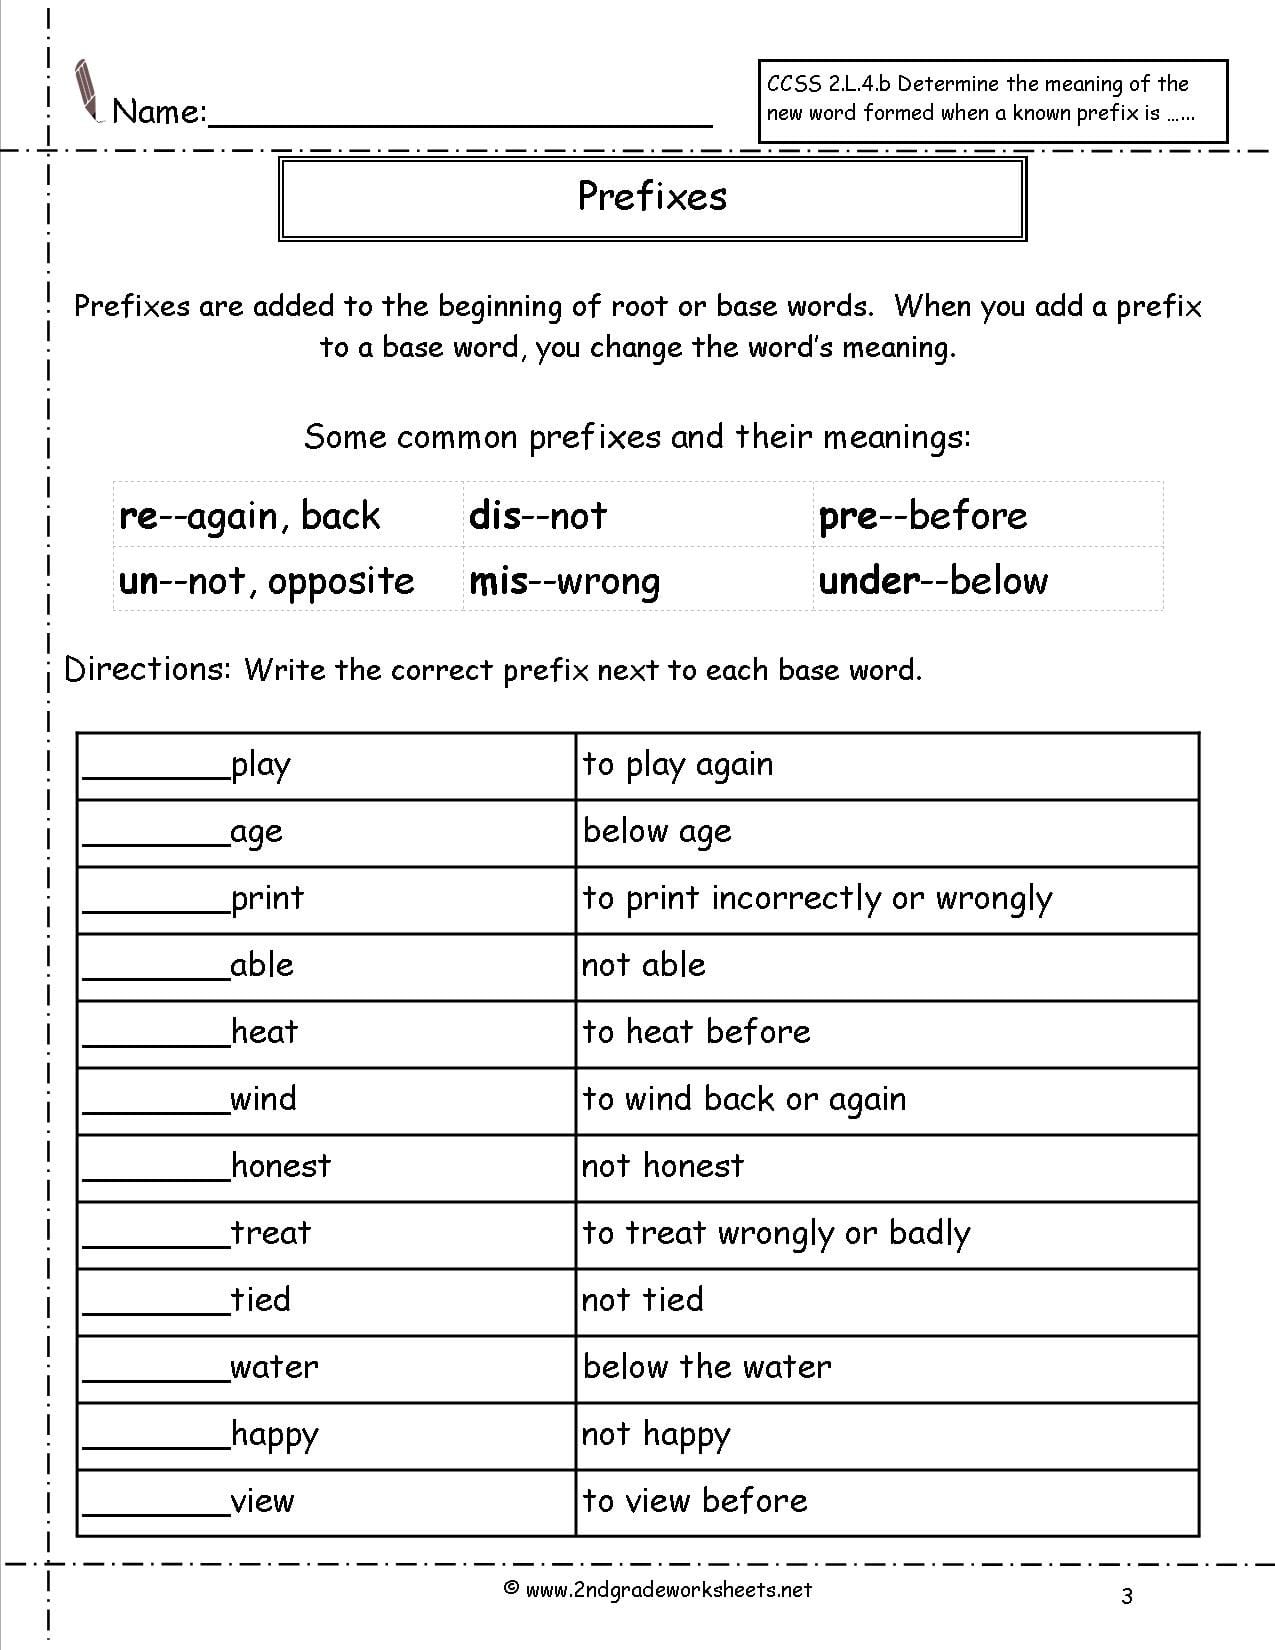 English Prefix And Suffix Worksheet